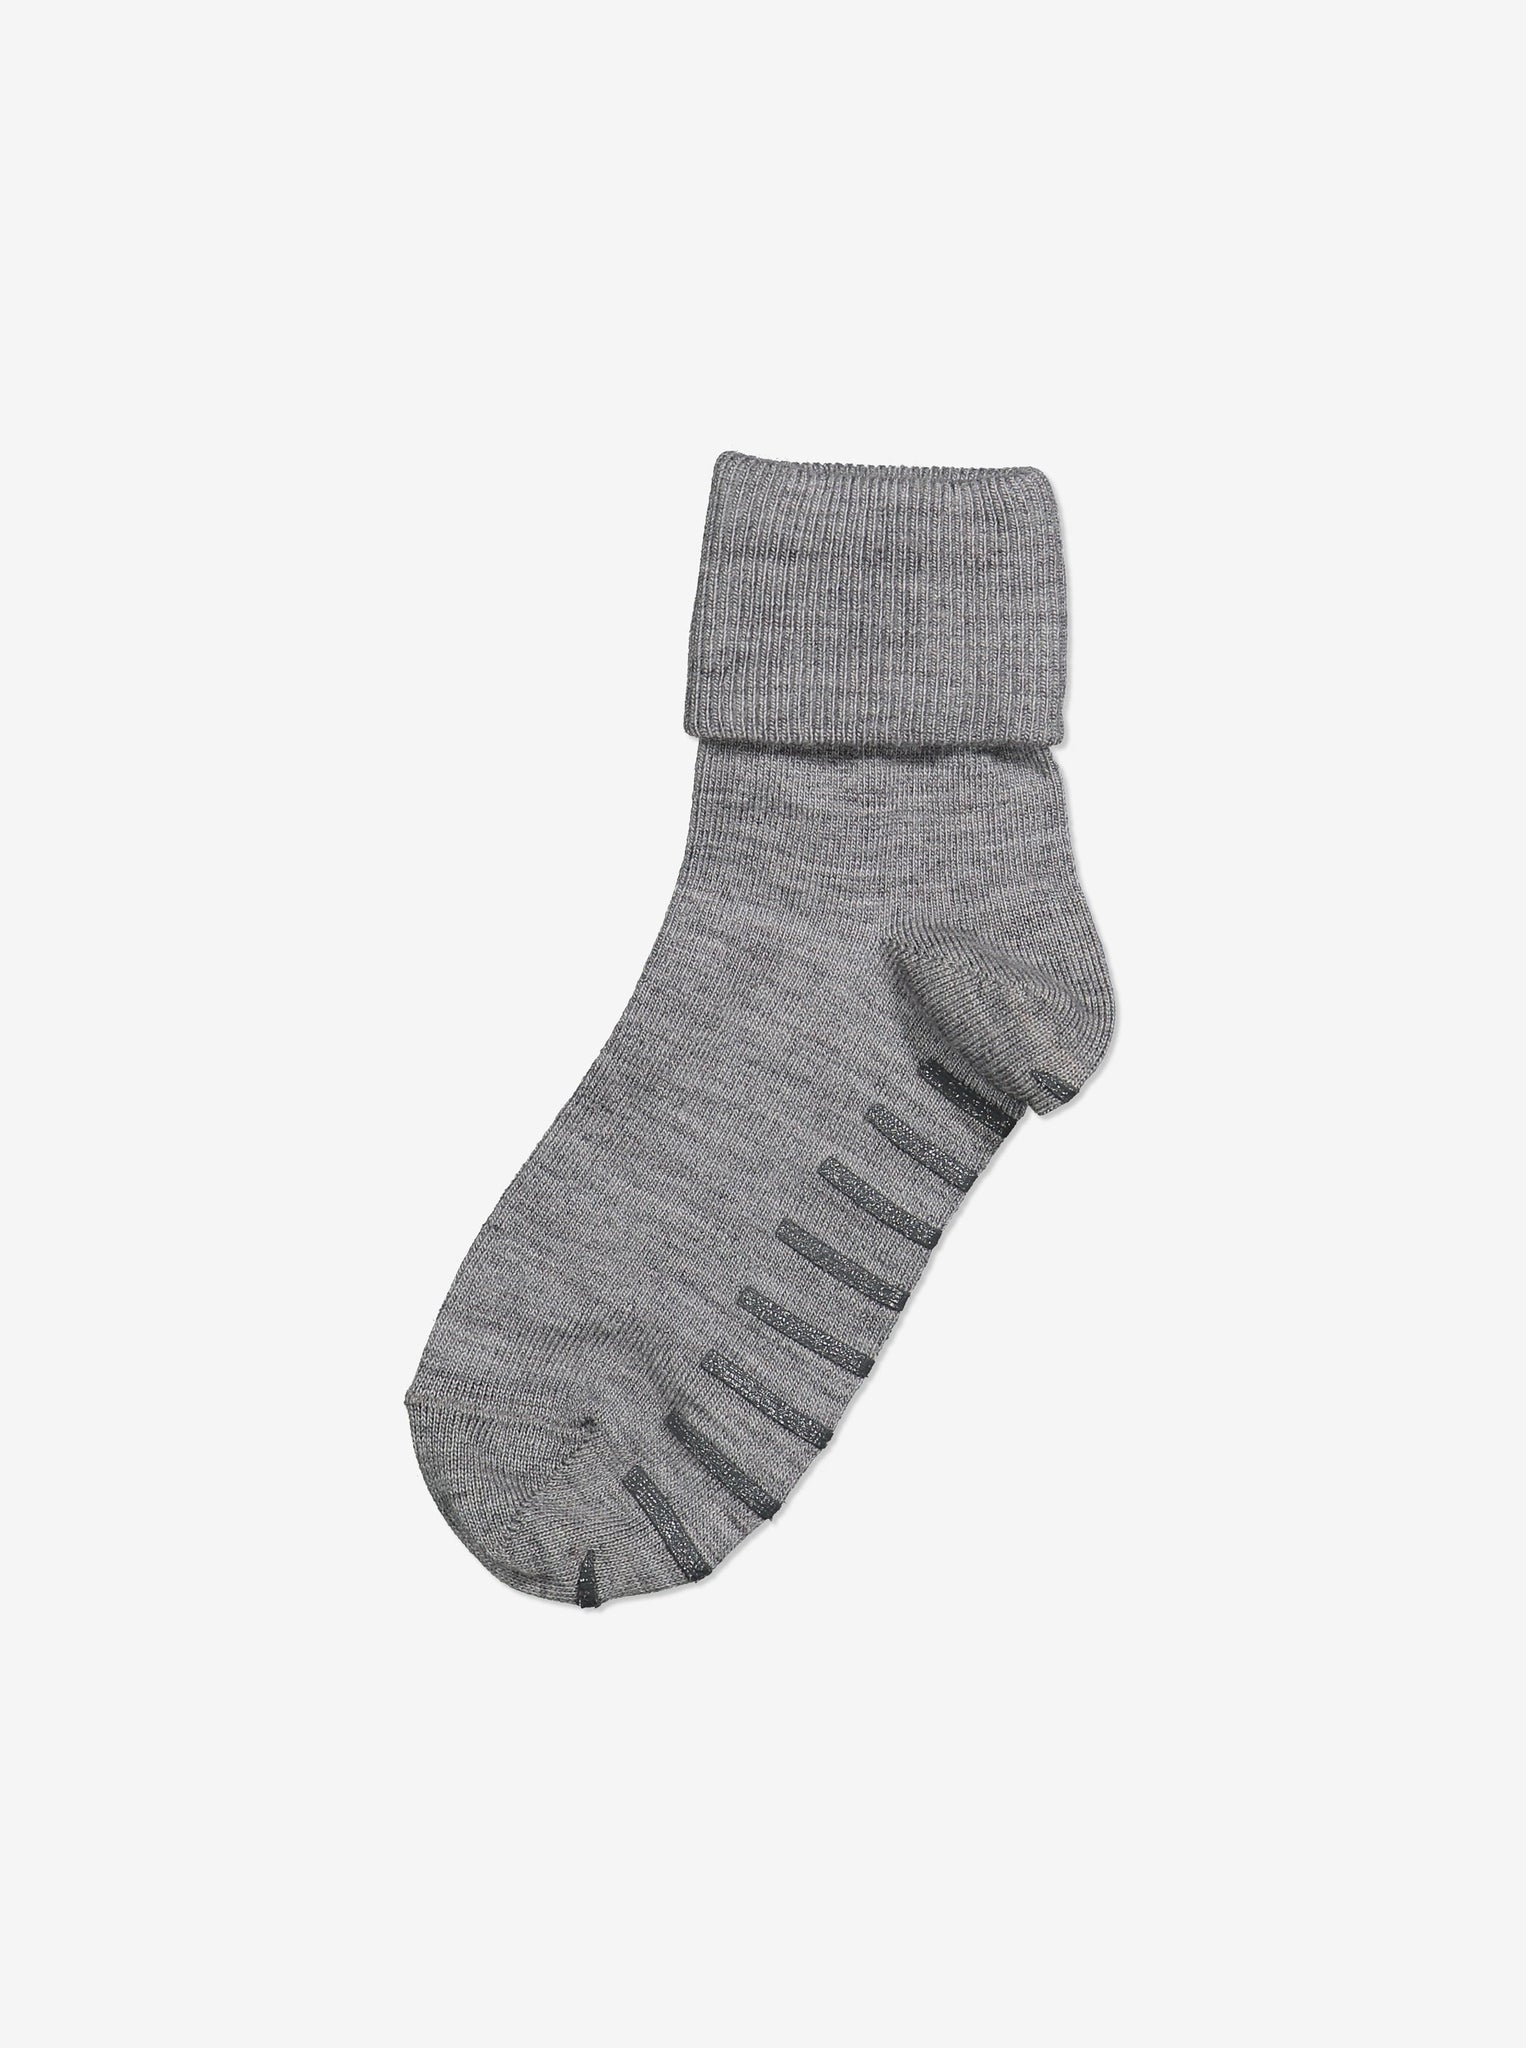 Merino Antislip Kids Socks grey, comfortable and warm, polarn o. pyret ethical